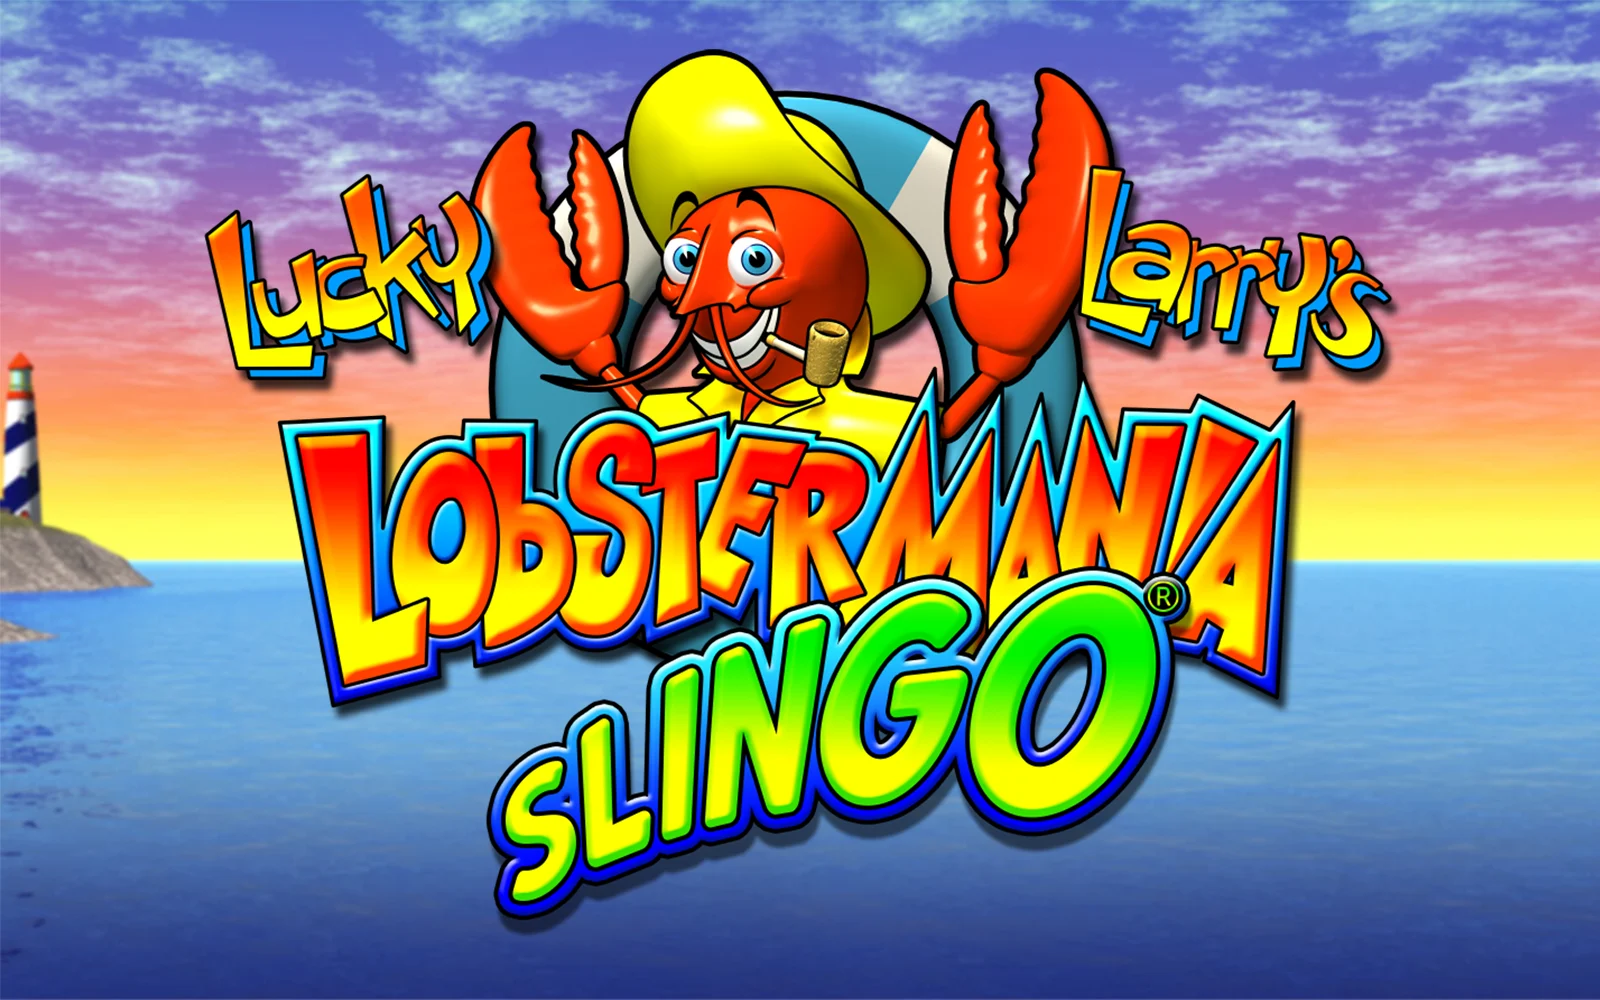 Jogue Lucky Larry's Lobstermania Slingo no casino online Starcasino.be 